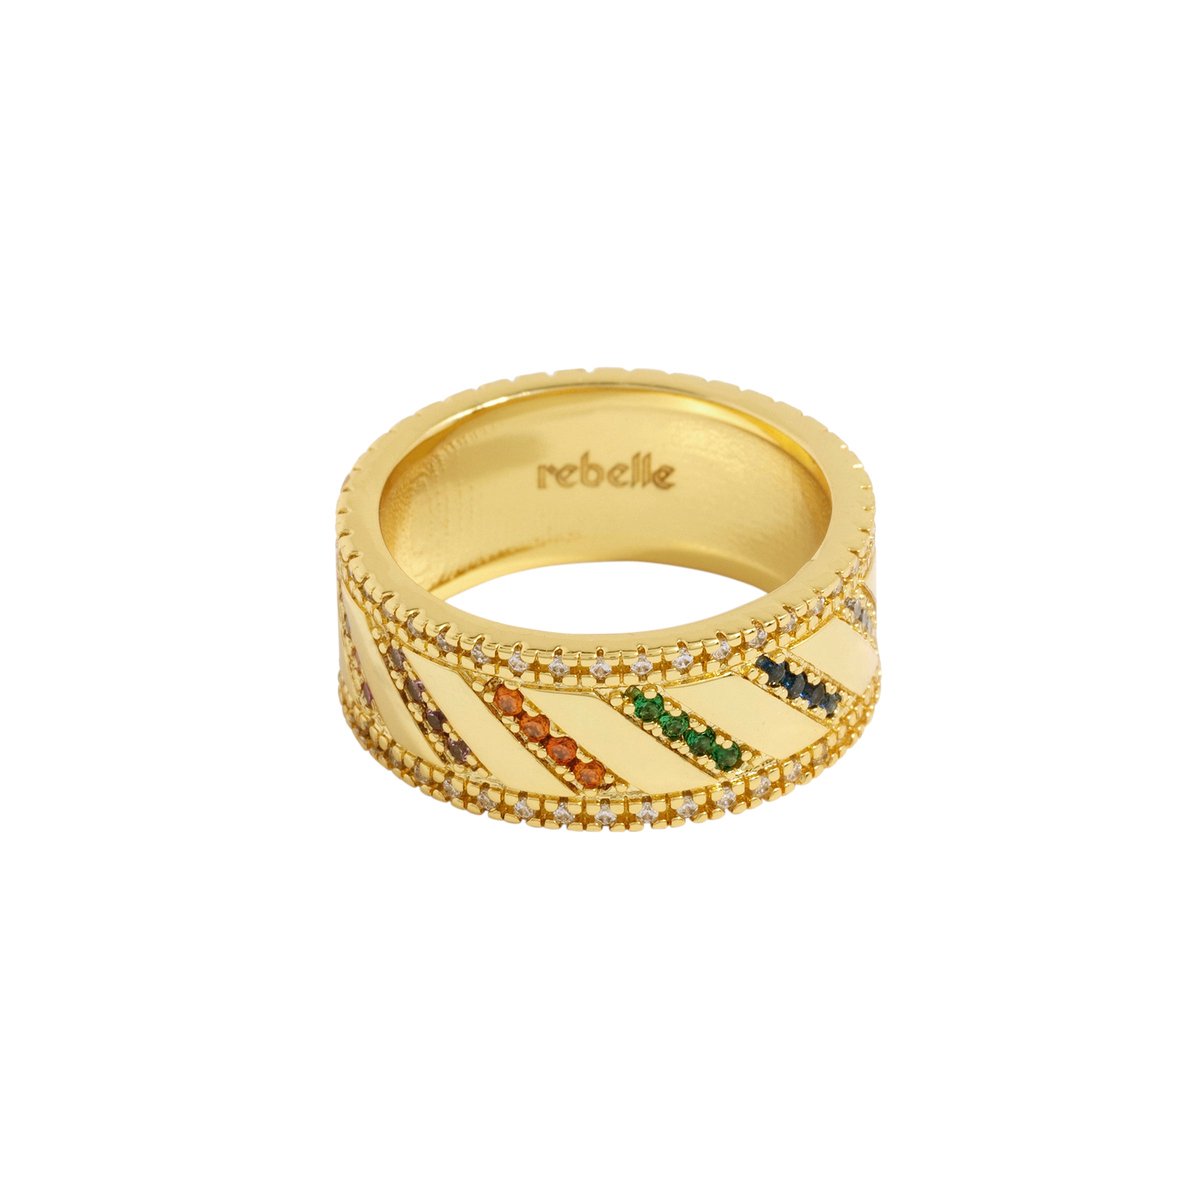 Rebelle Amsterdam - Dames Ring Goud - Ring Met Steentjes Goud - Diamanten Ring - Kleurrijk - Statement